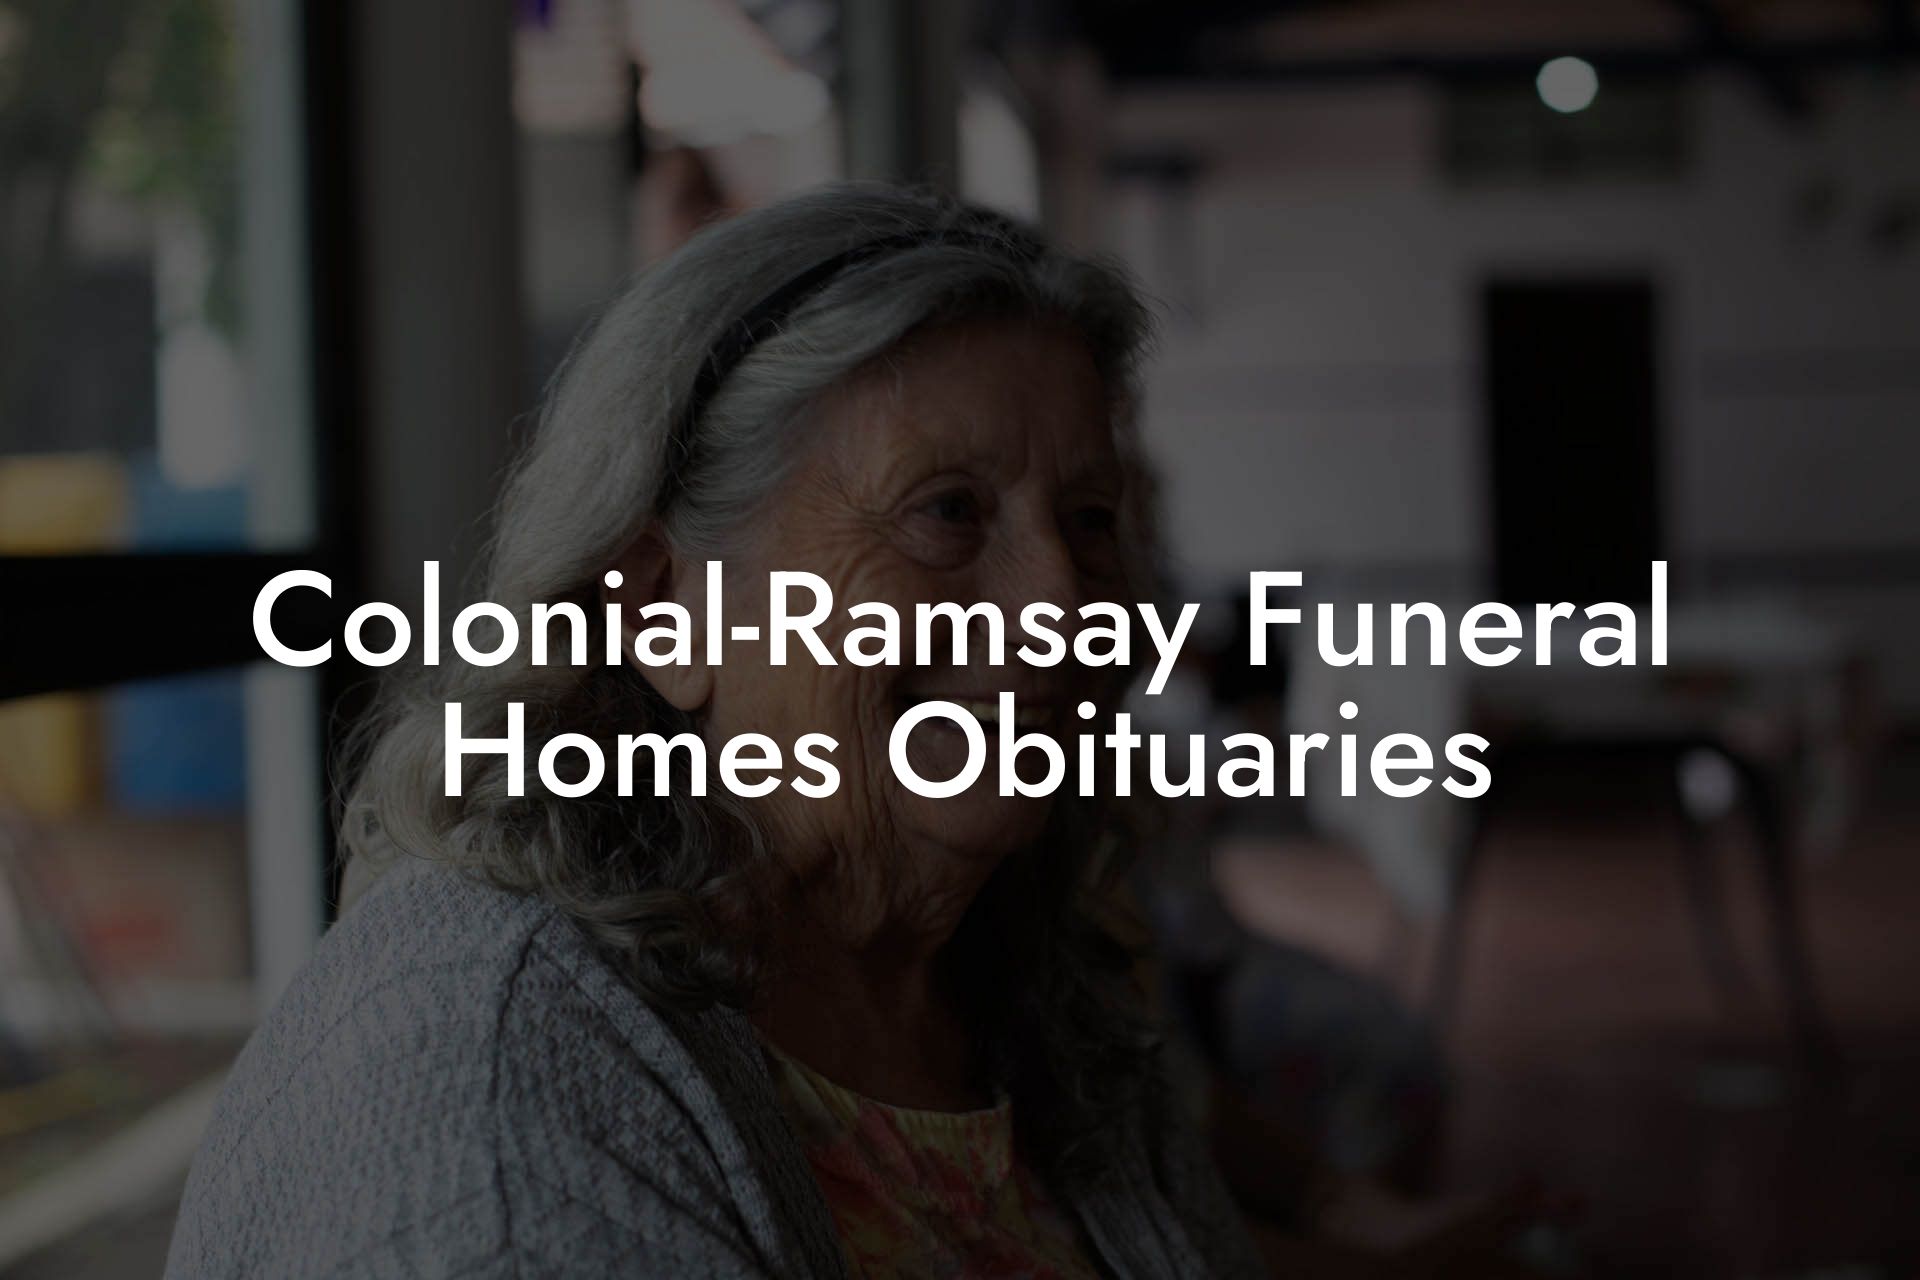 Colonial-Ramsay Funeral Homes Obituaries